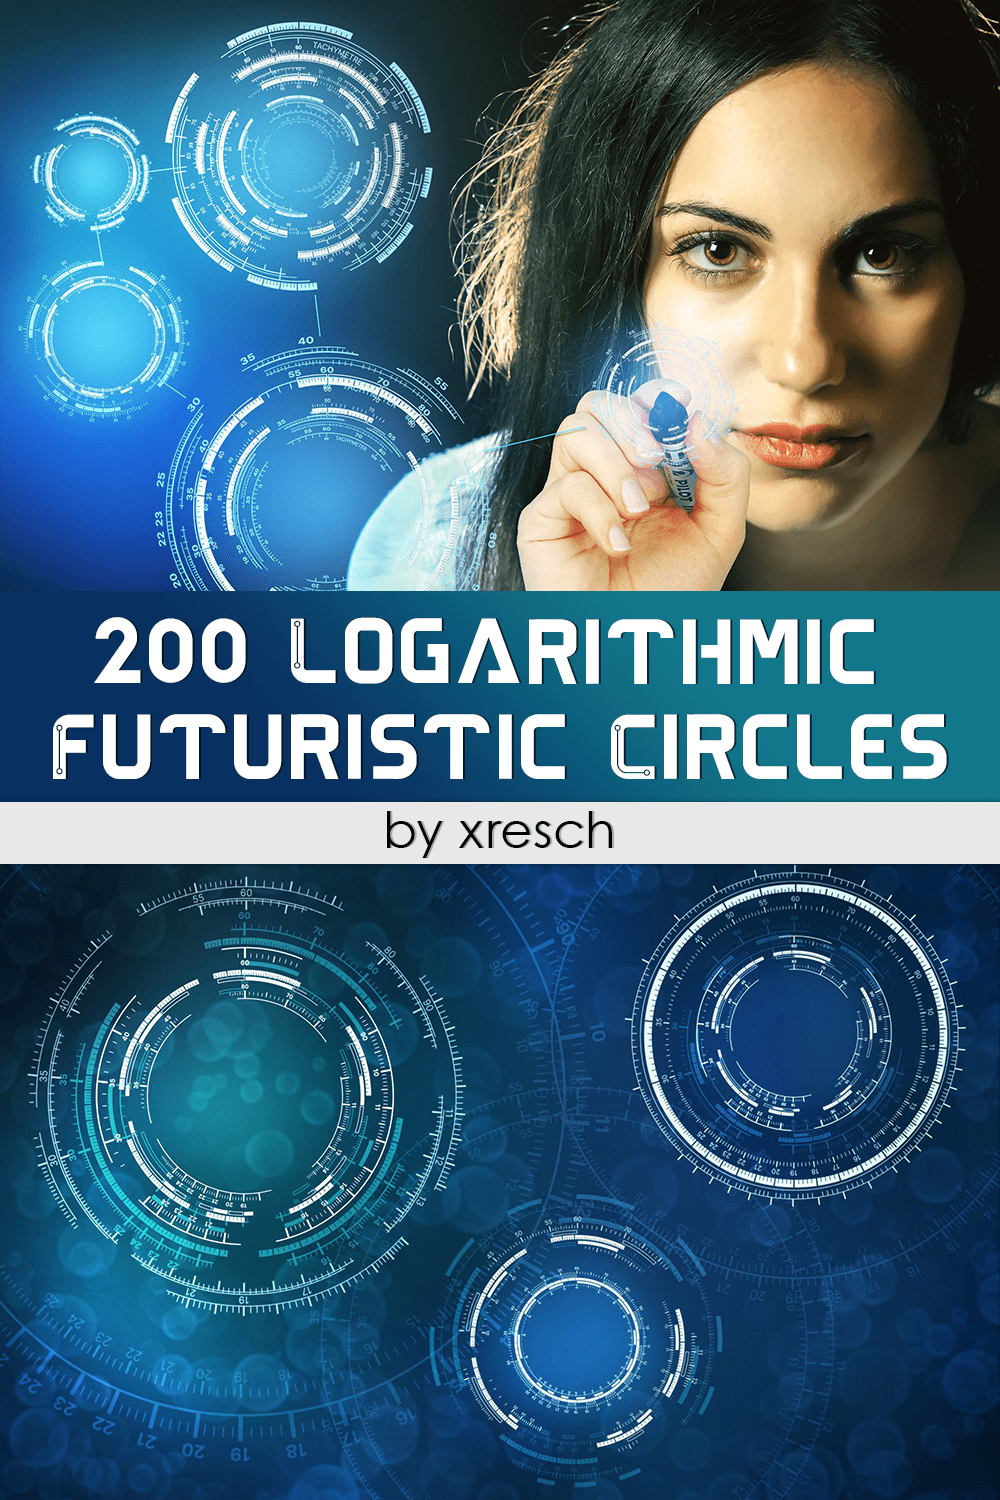 200 Logarithmic Futuristic Circles - Pinterest.